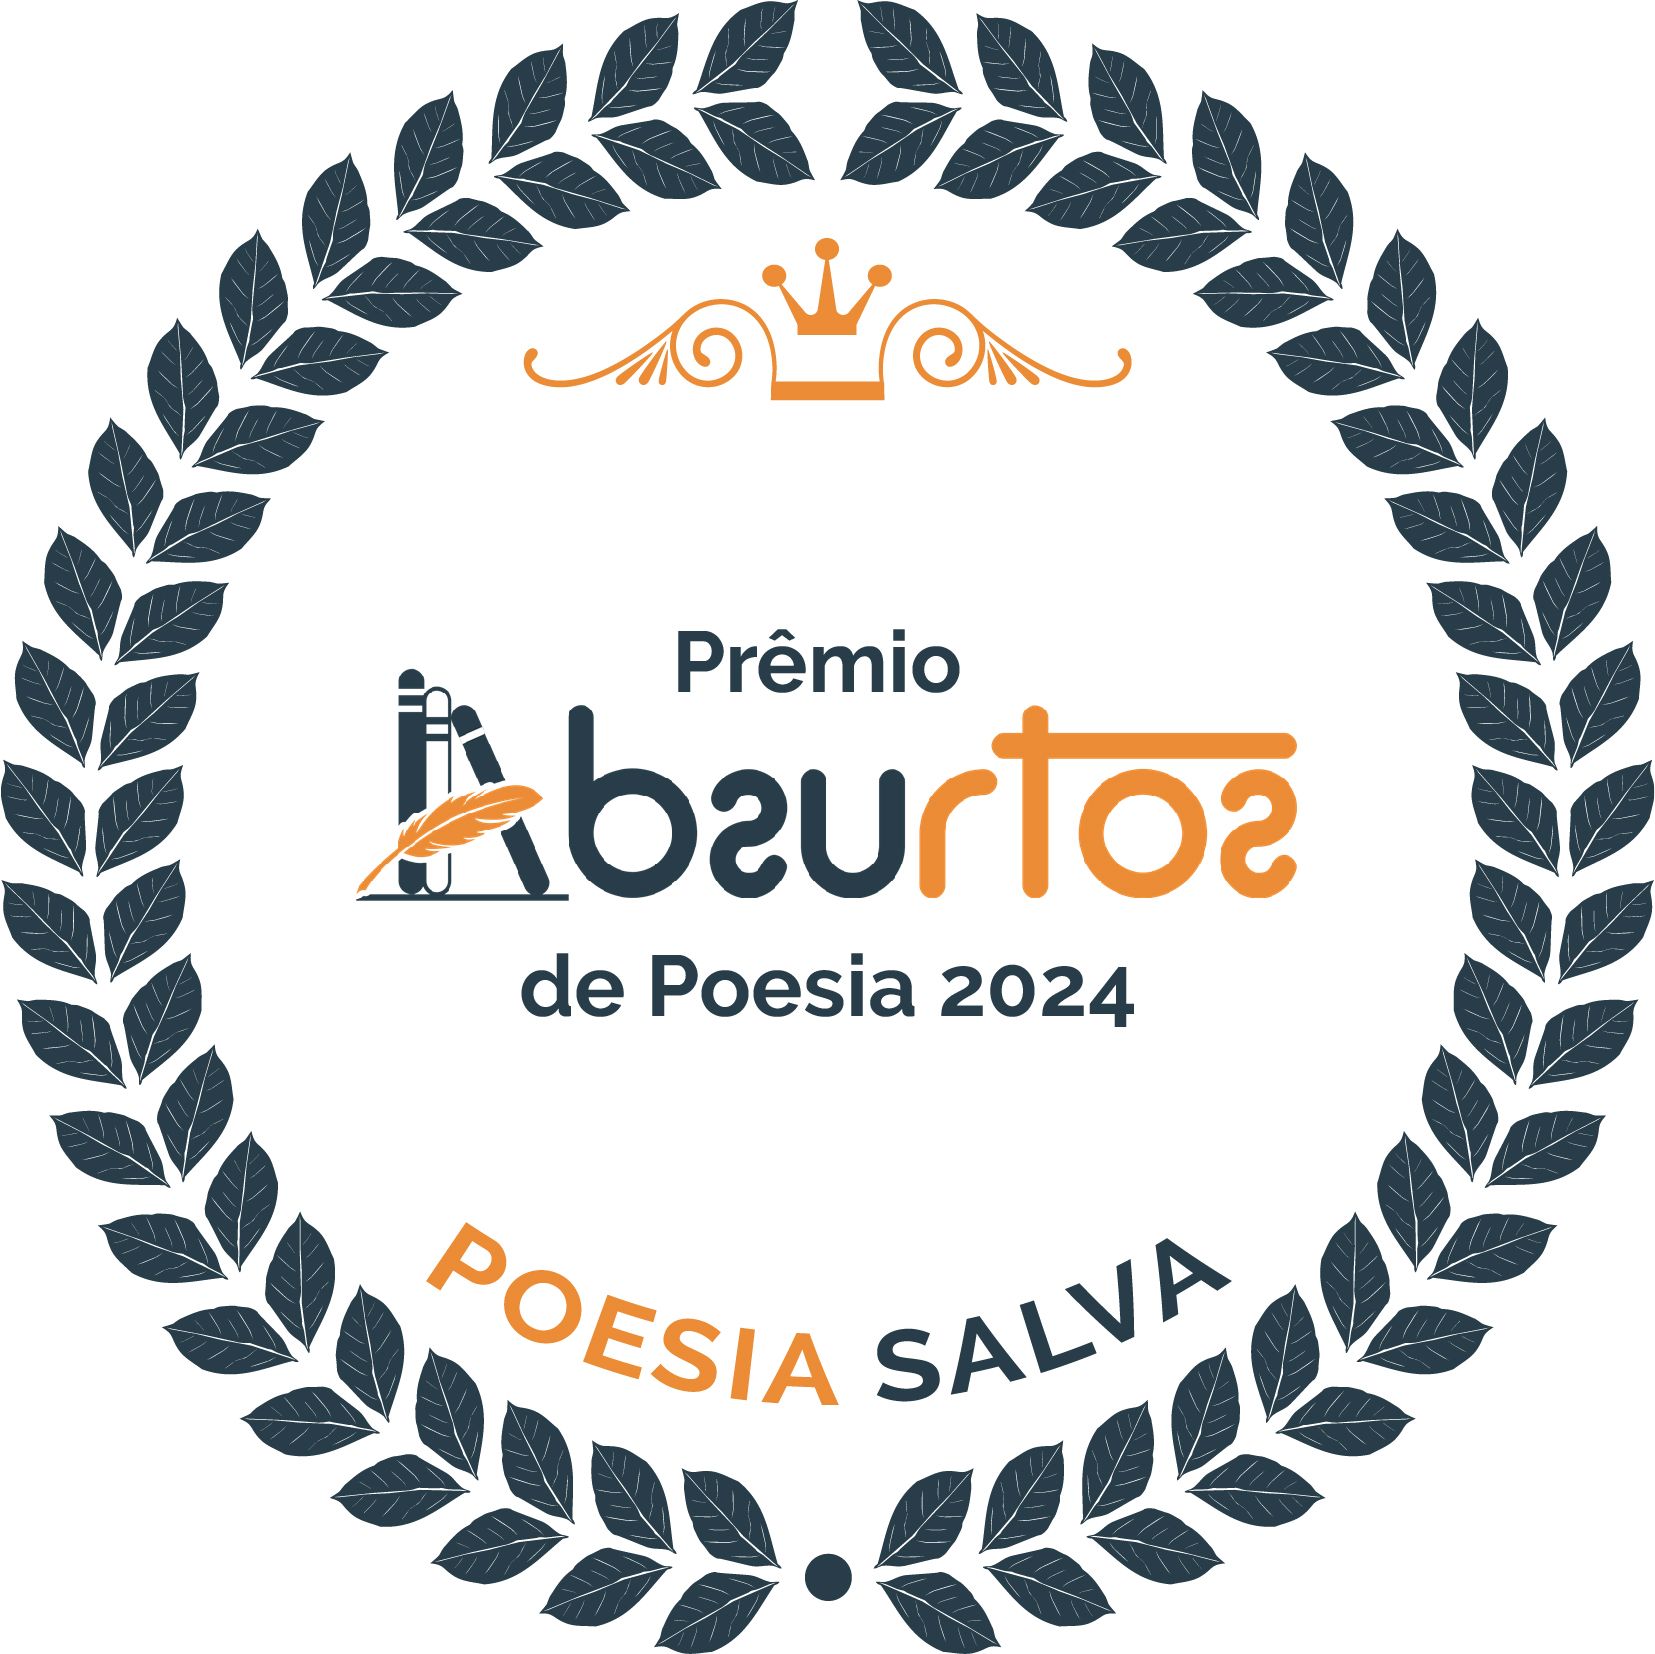 Prêmio Absurtos de Poesia 2024